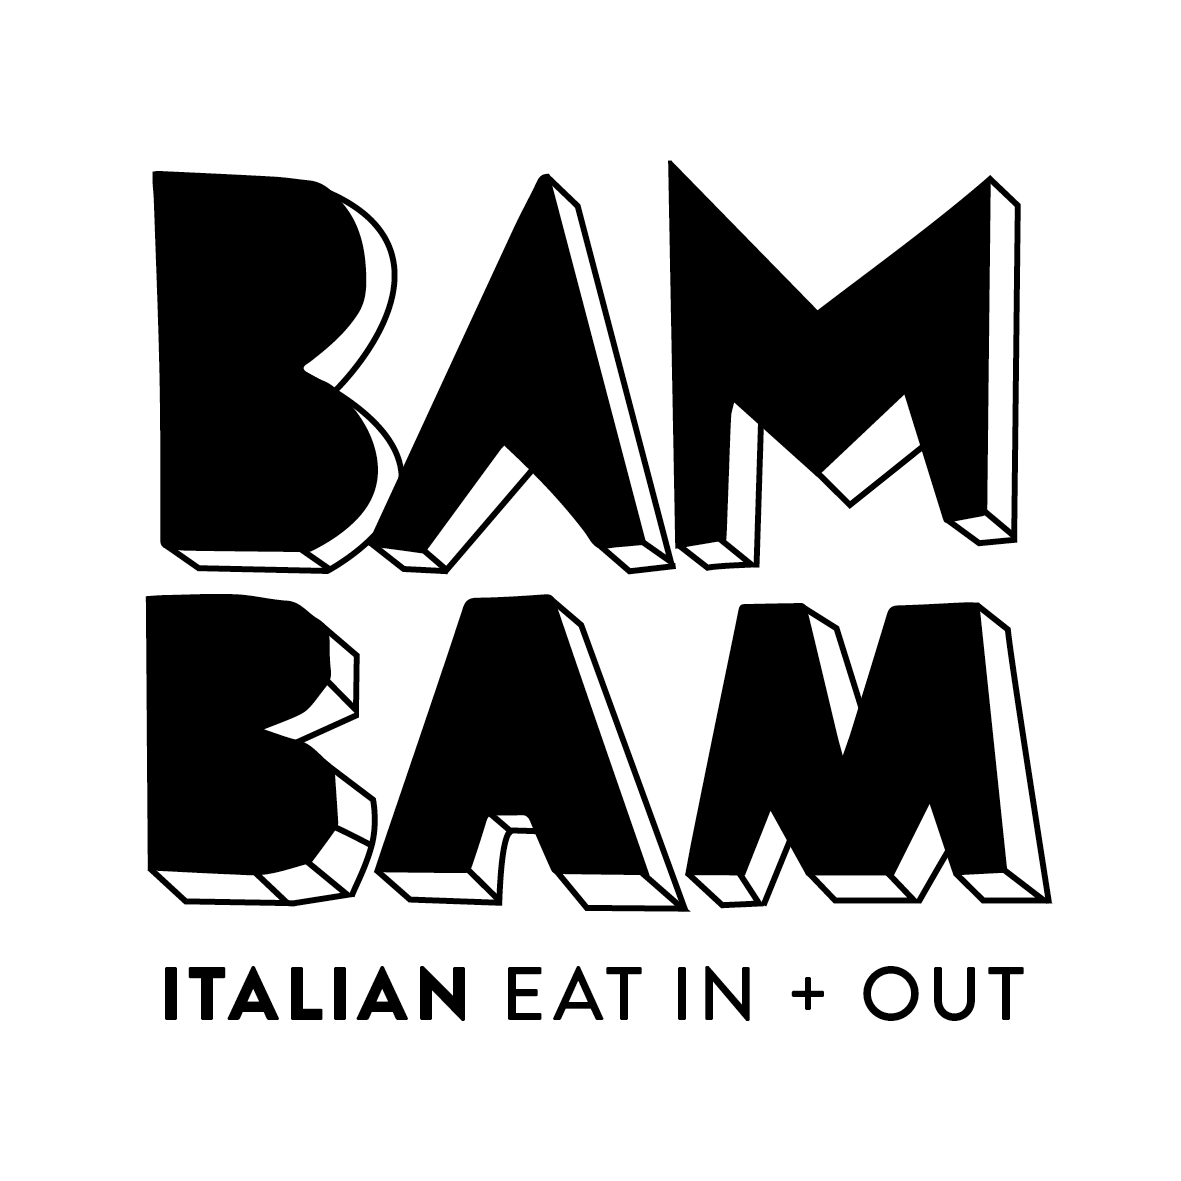 Bam Bam Italian